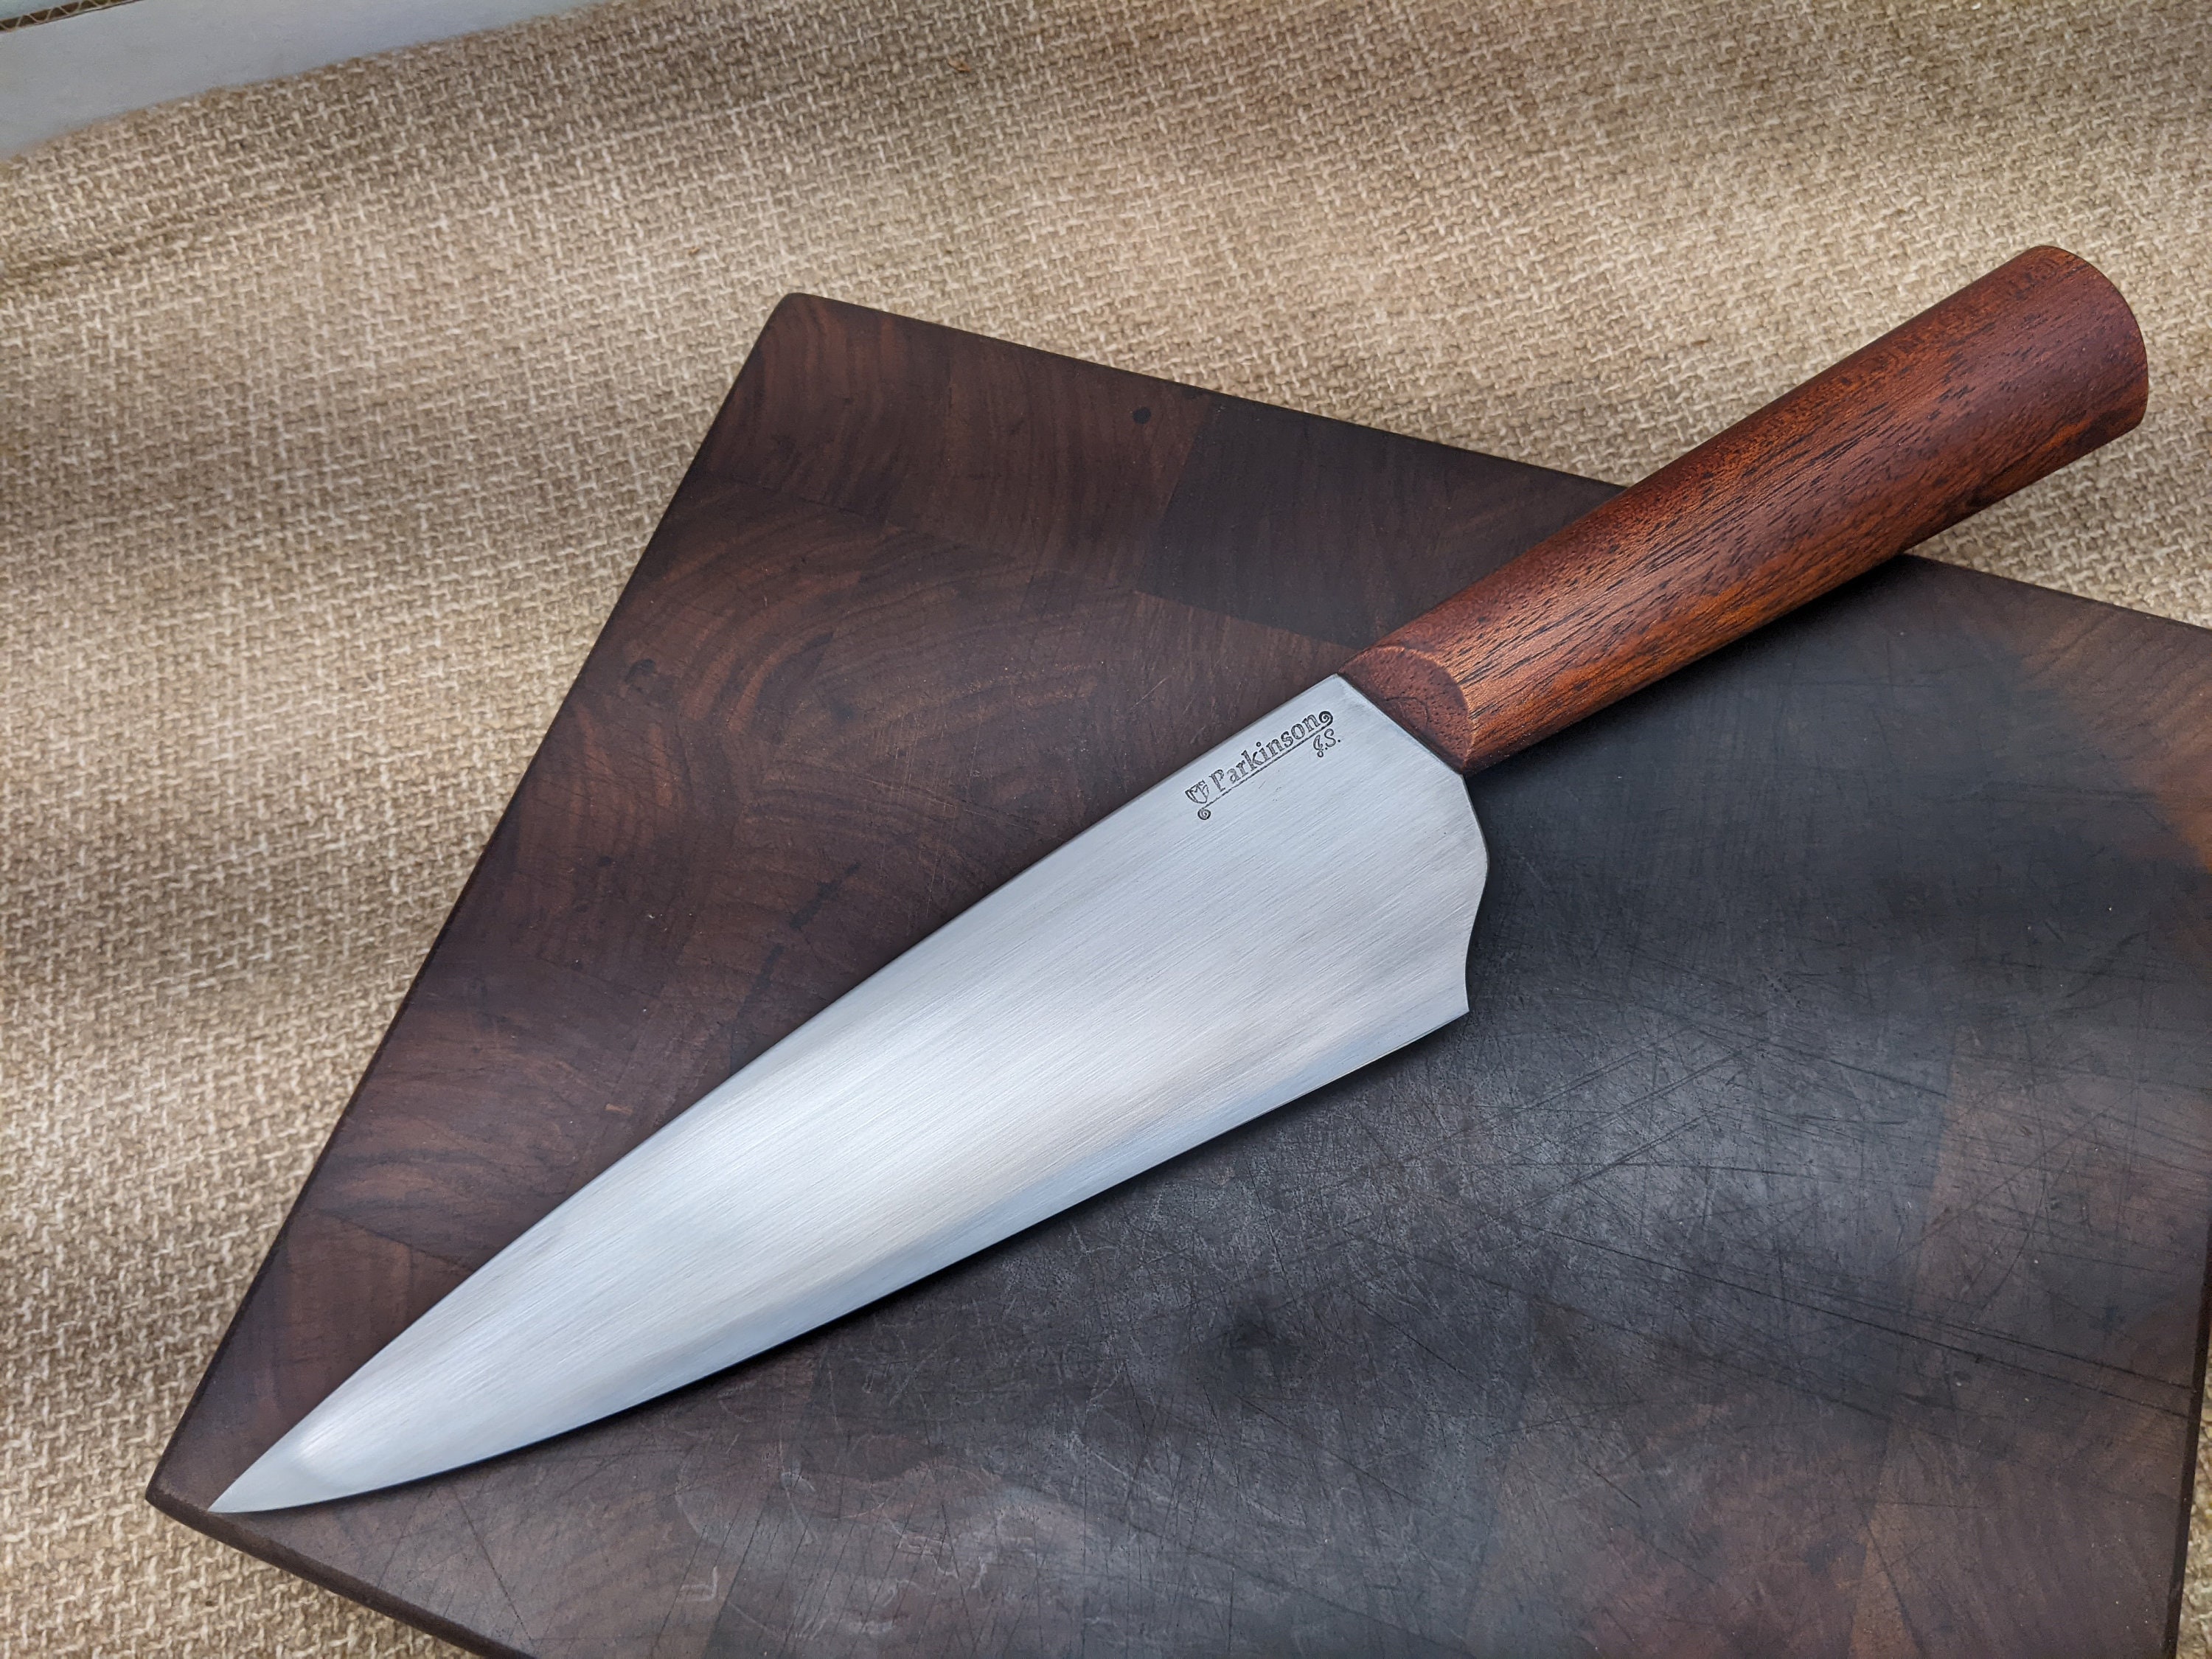 Kitchen Knives - Dragon's Breath Forge - Custom Blacksmith